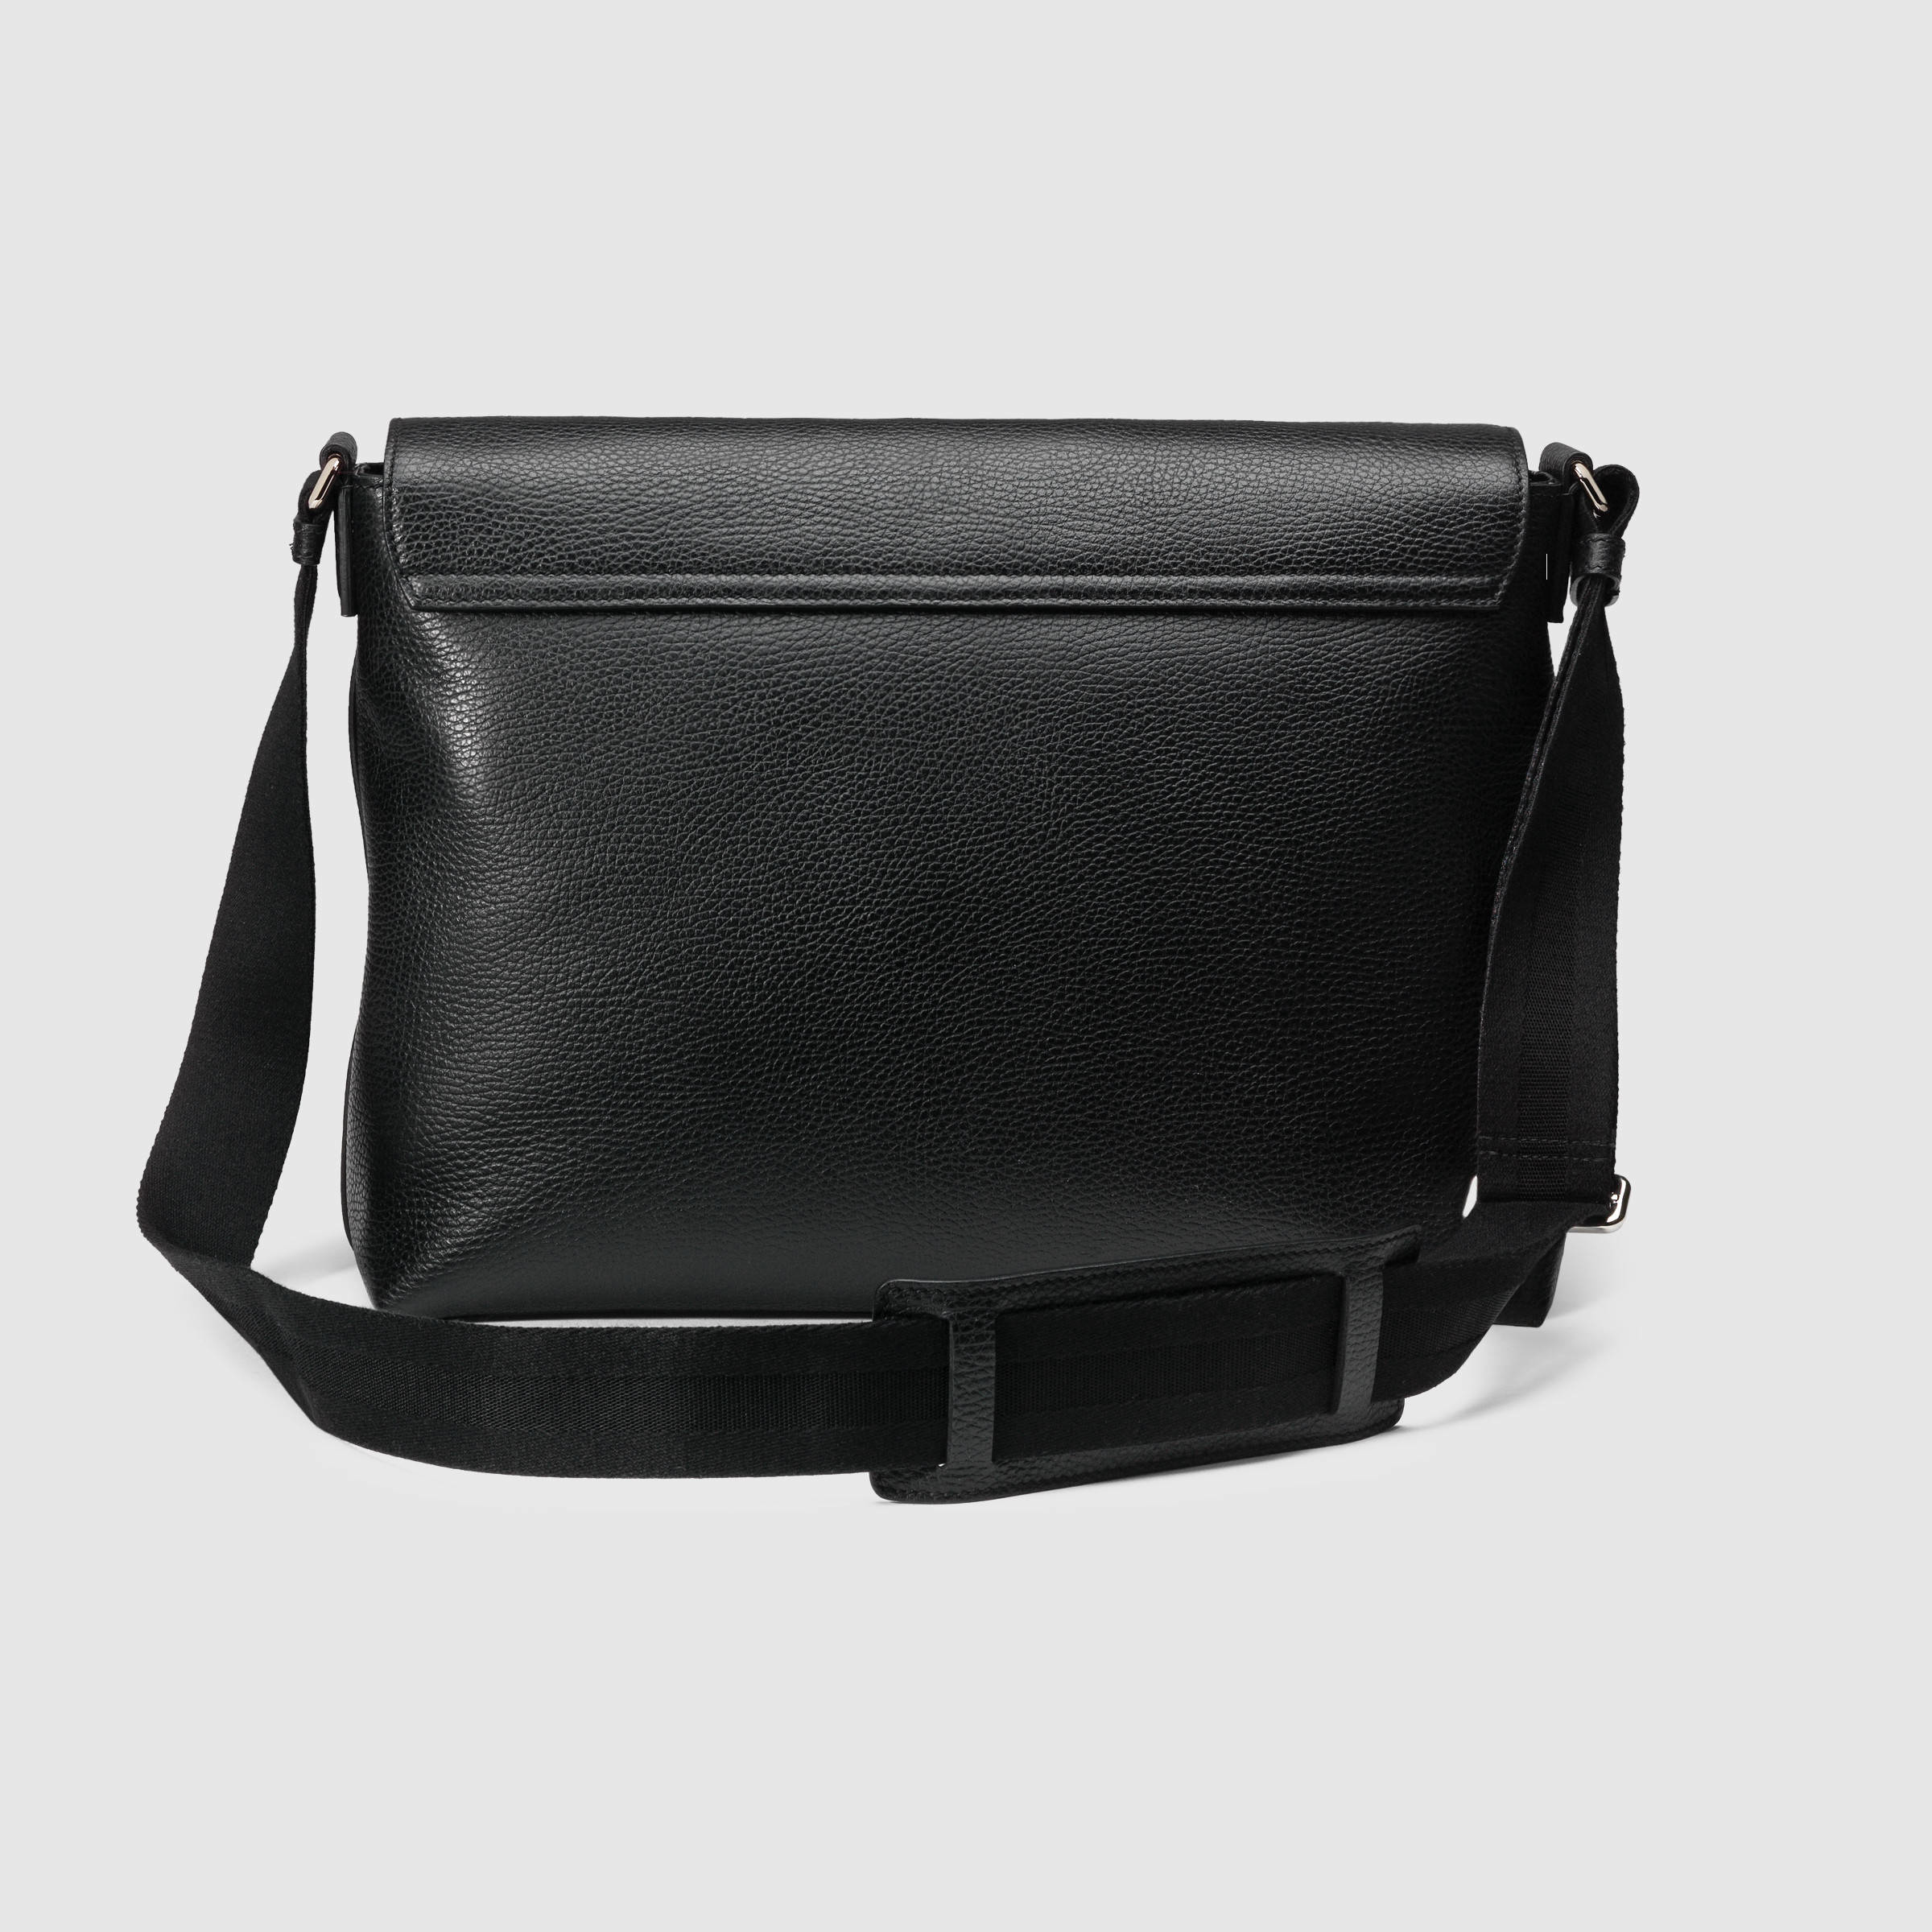 Gucci Leather Messenger Bag in Black Leather (Black) for Men - Lyst